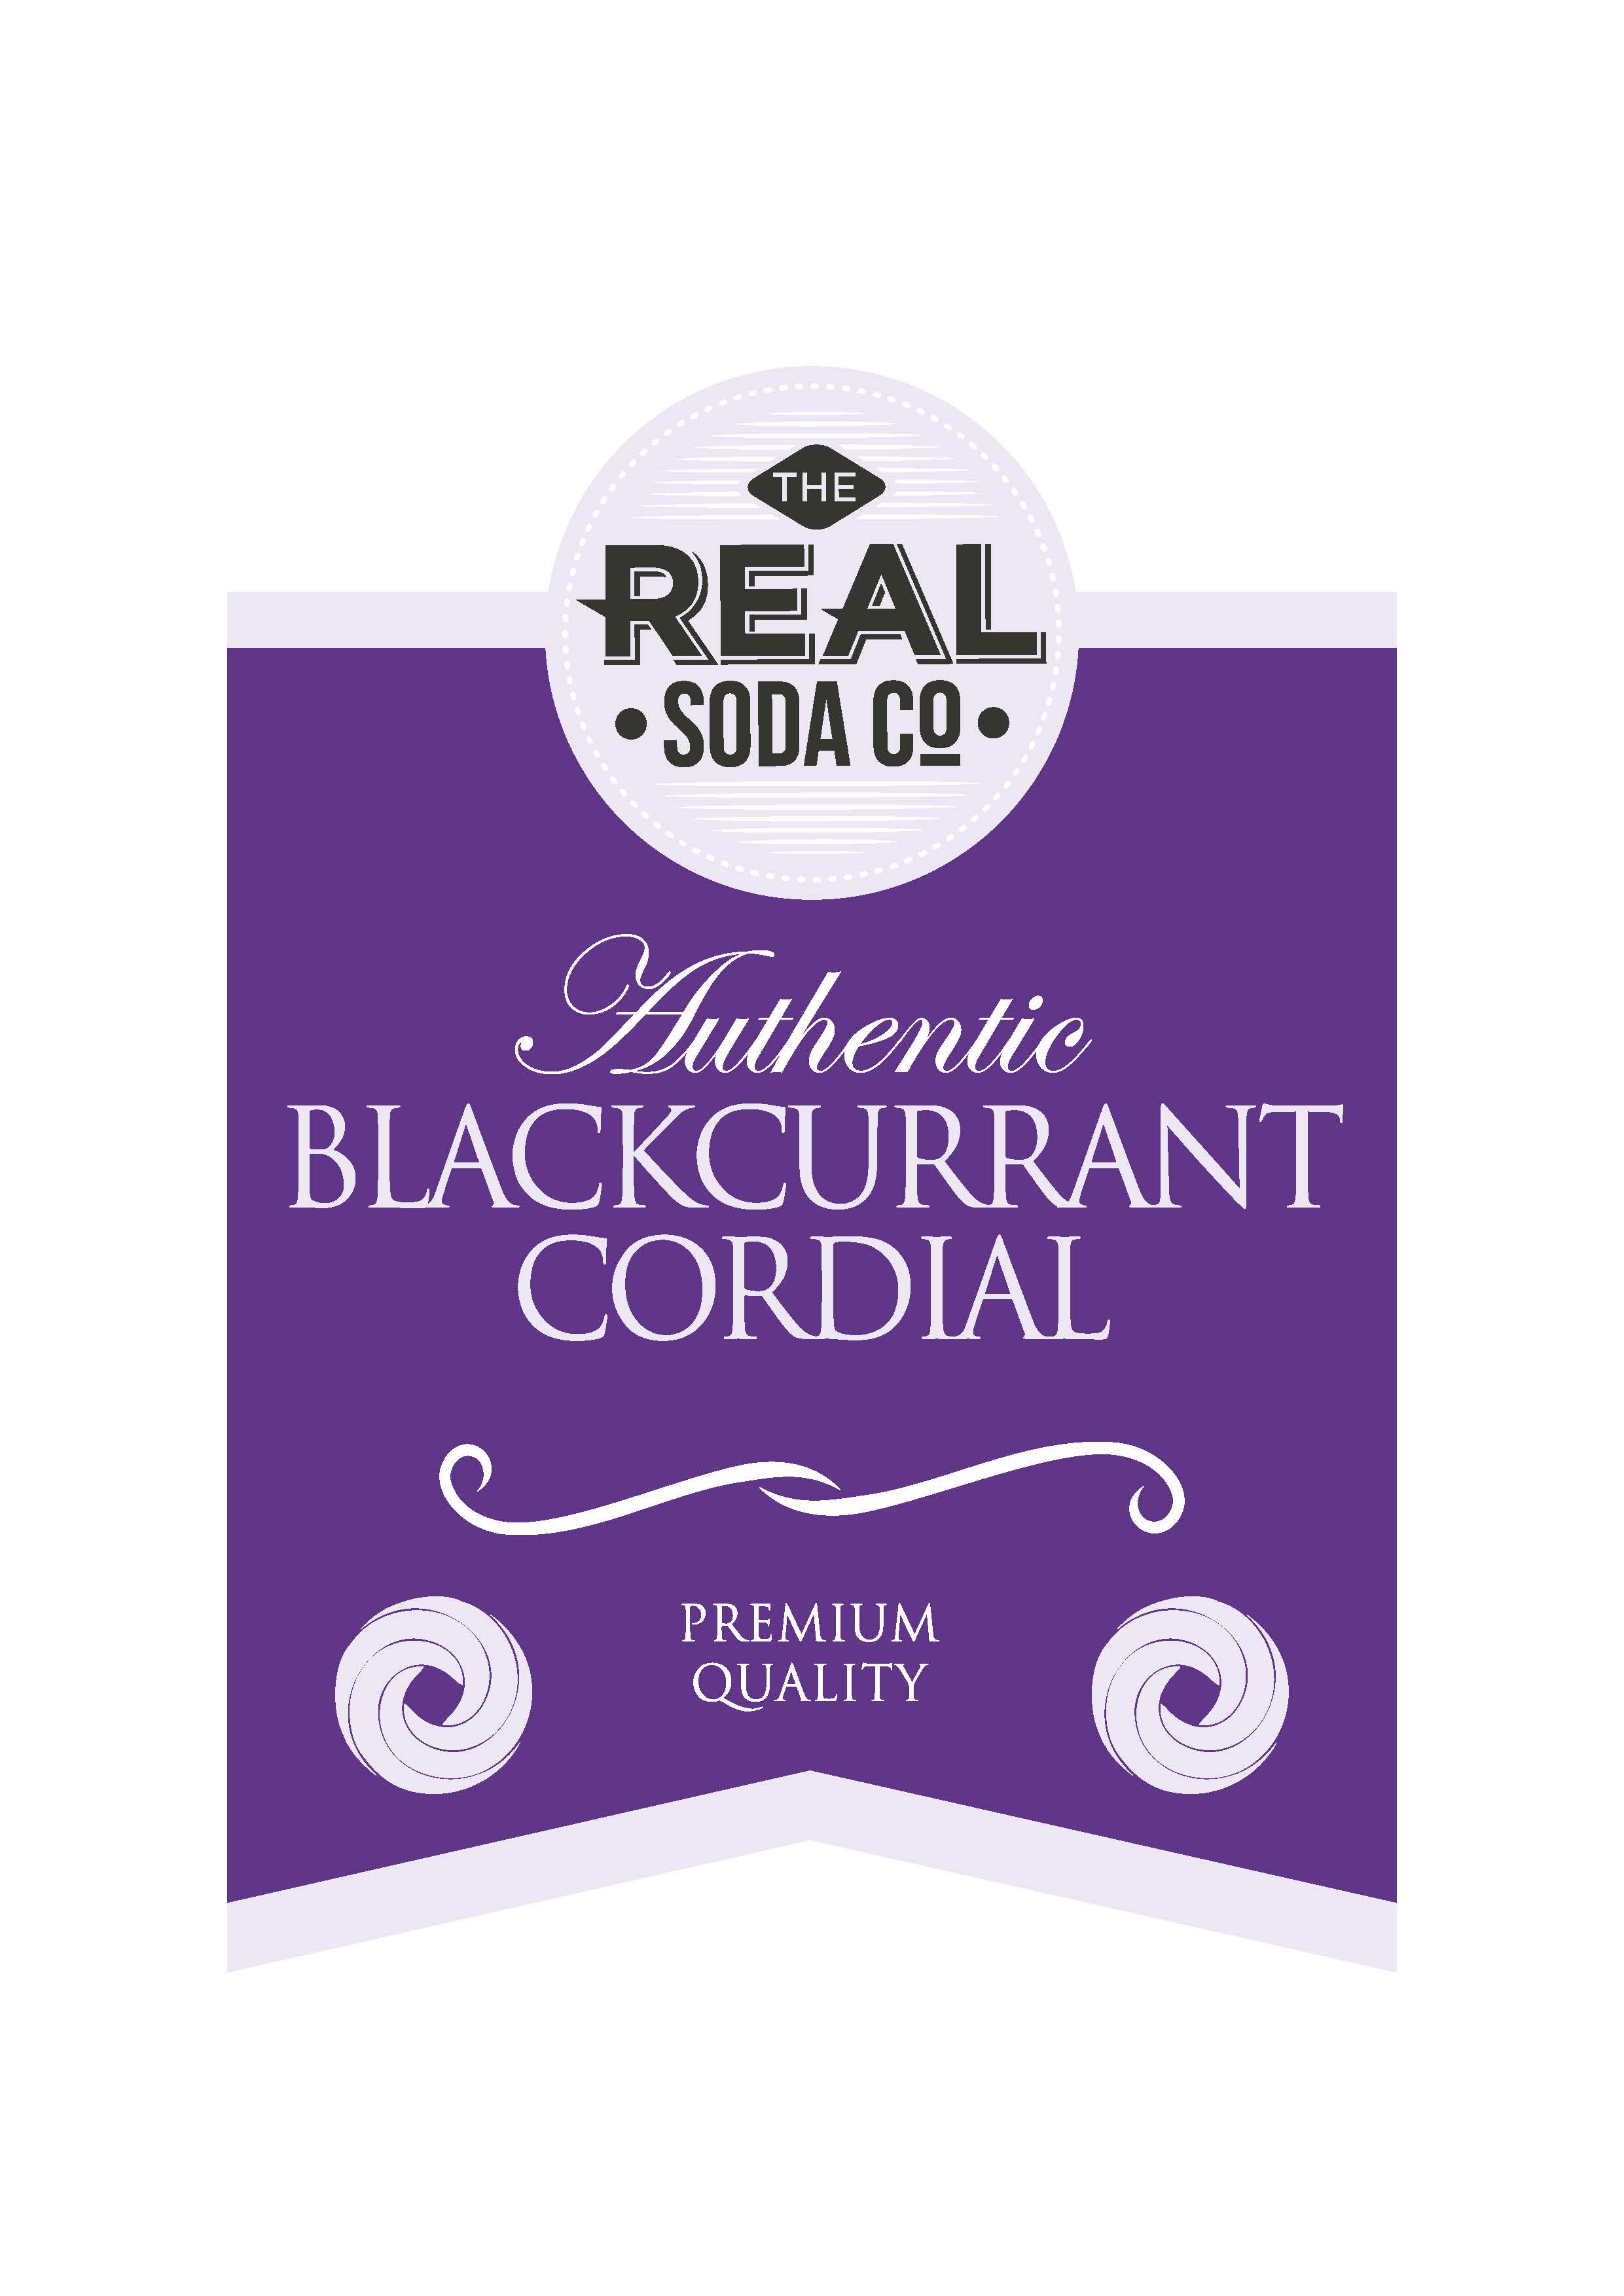 Blackcurrant Cordial